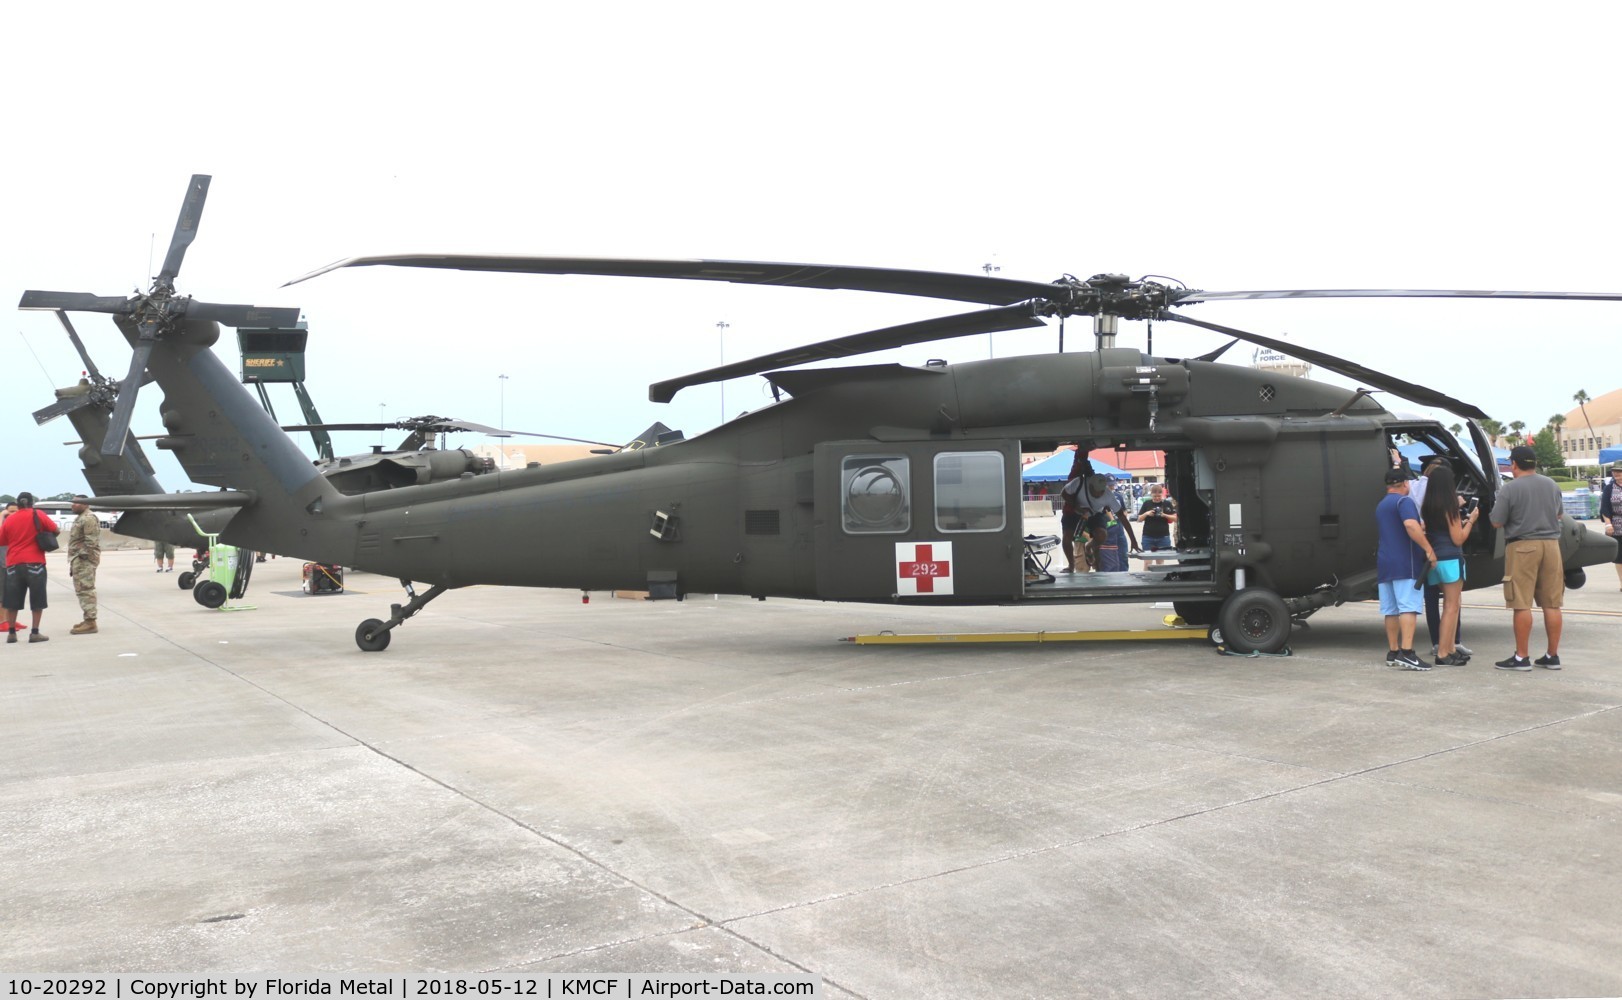 10-20292, 2010 Sikorsky HH-60M Blackhawk C/N 703711, US Army HH-60M